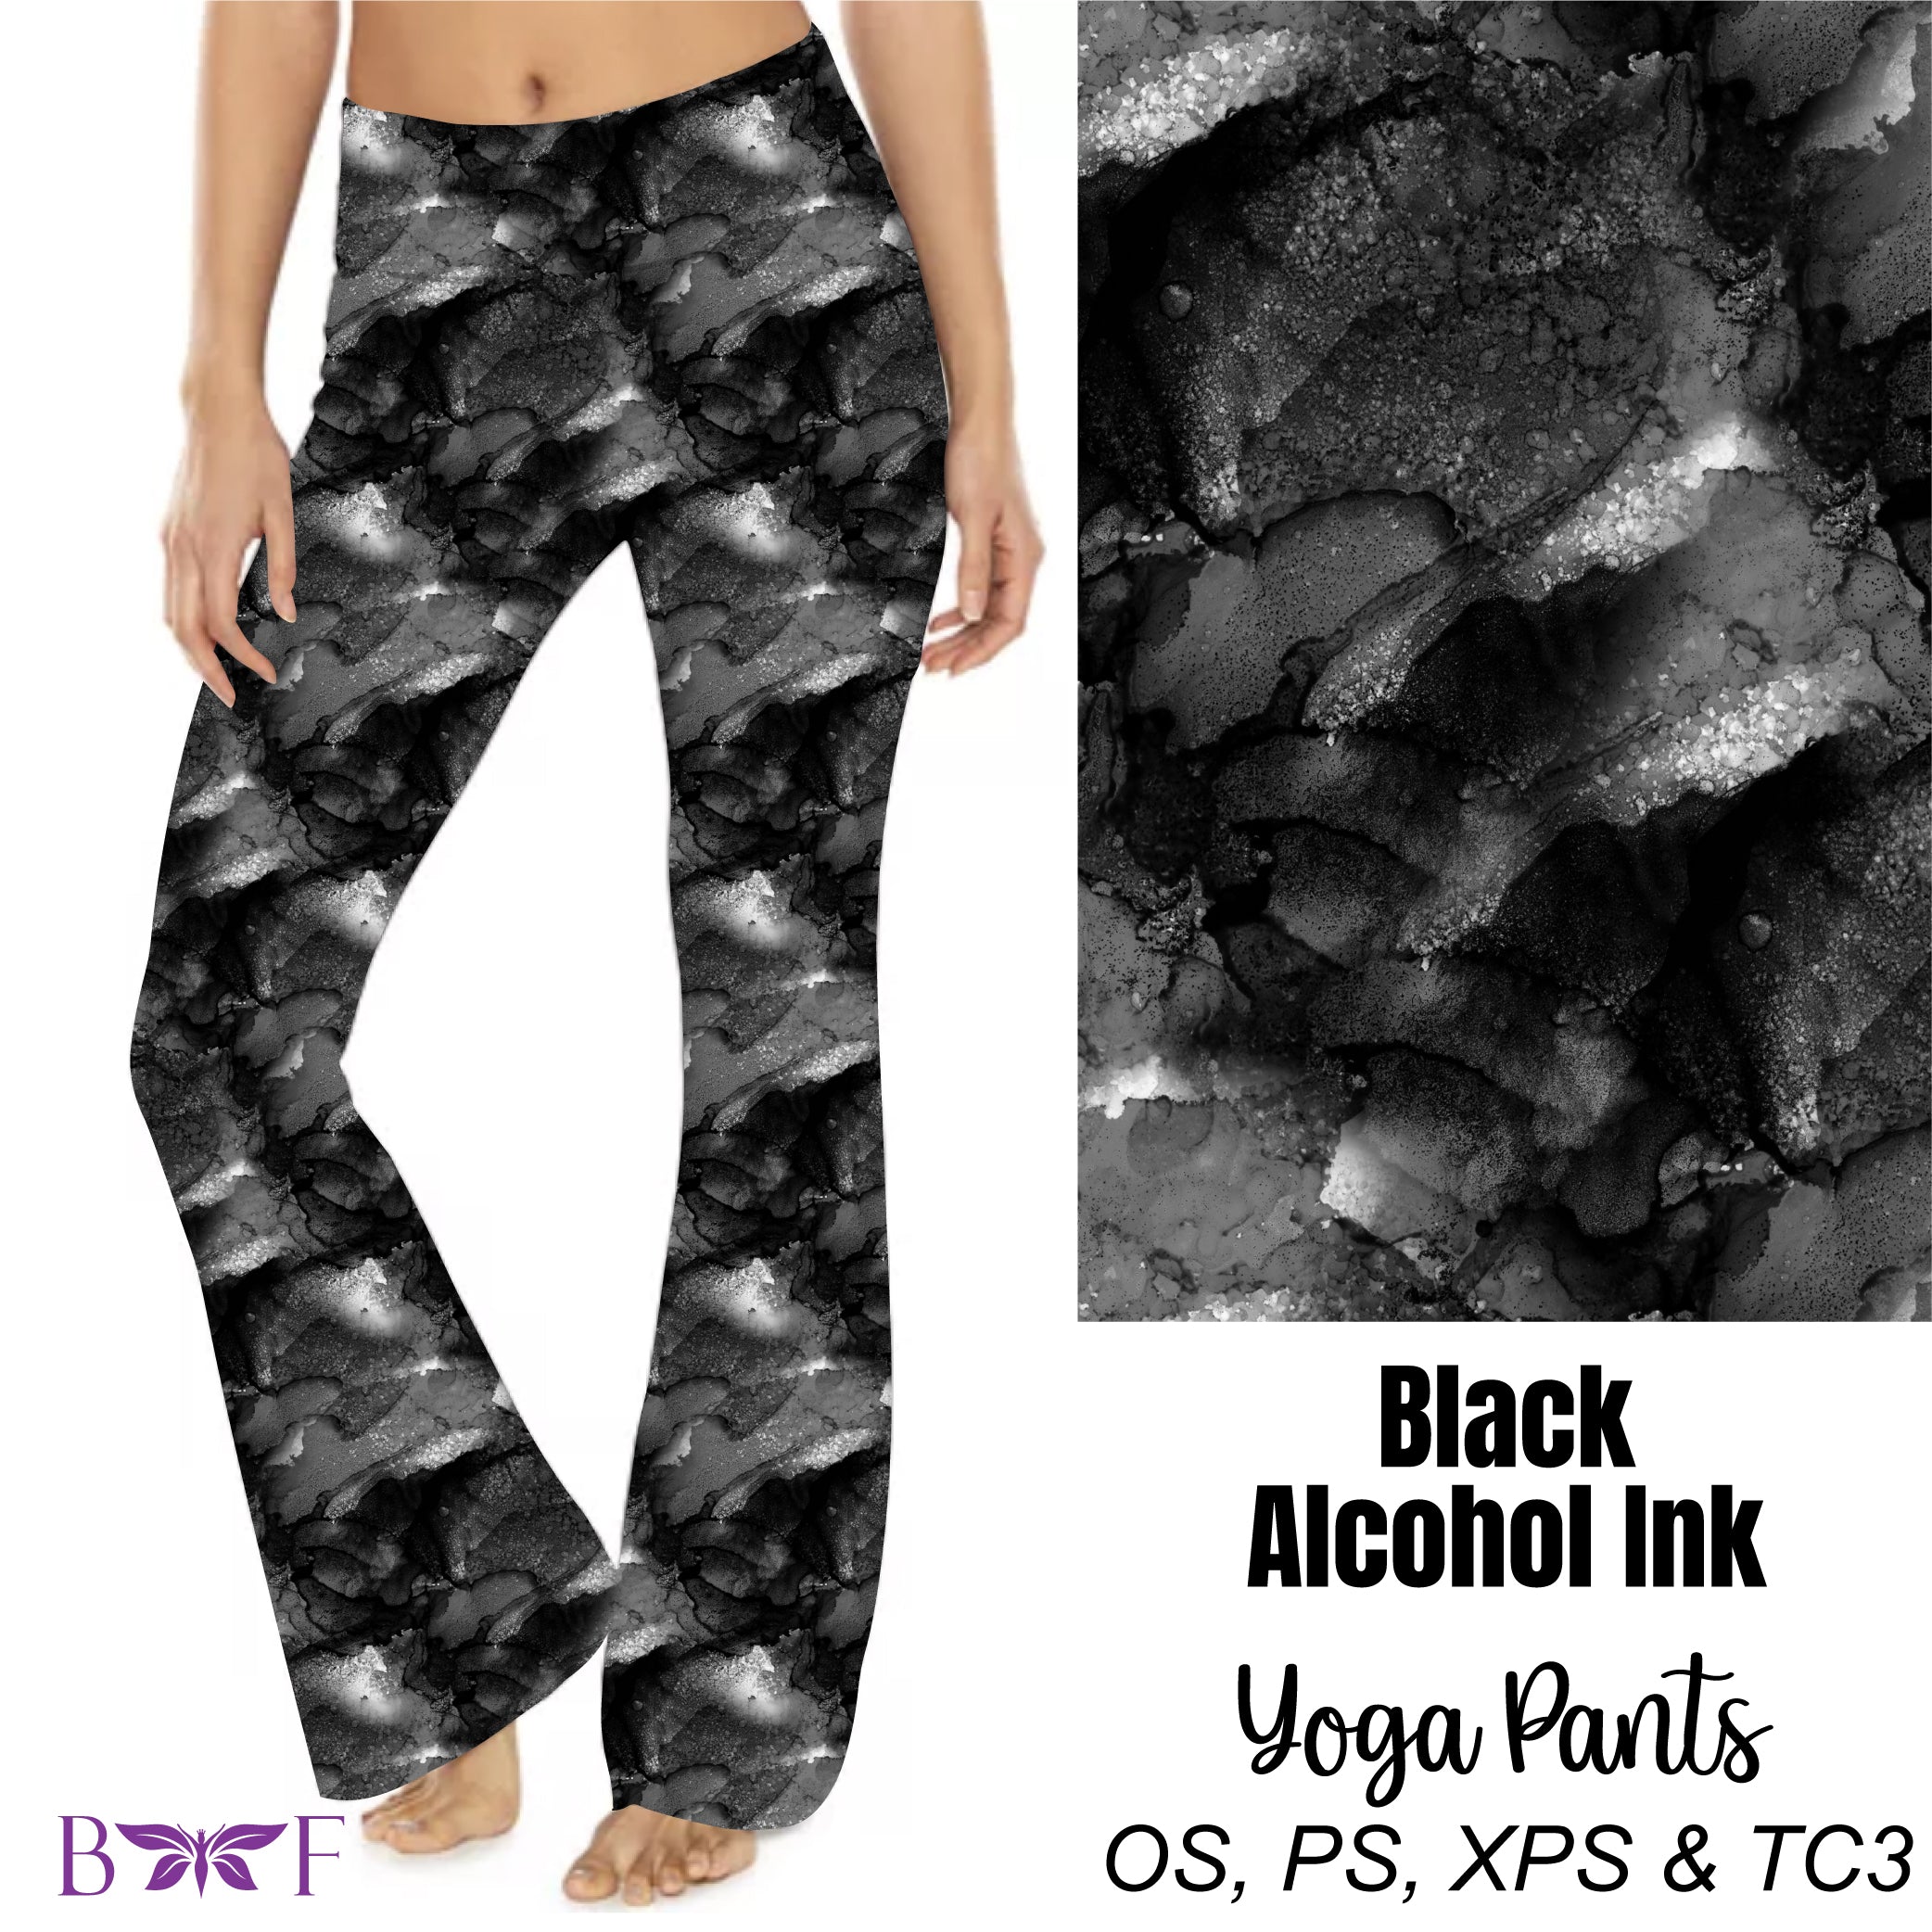 Black Alcohol Ink yoga pants